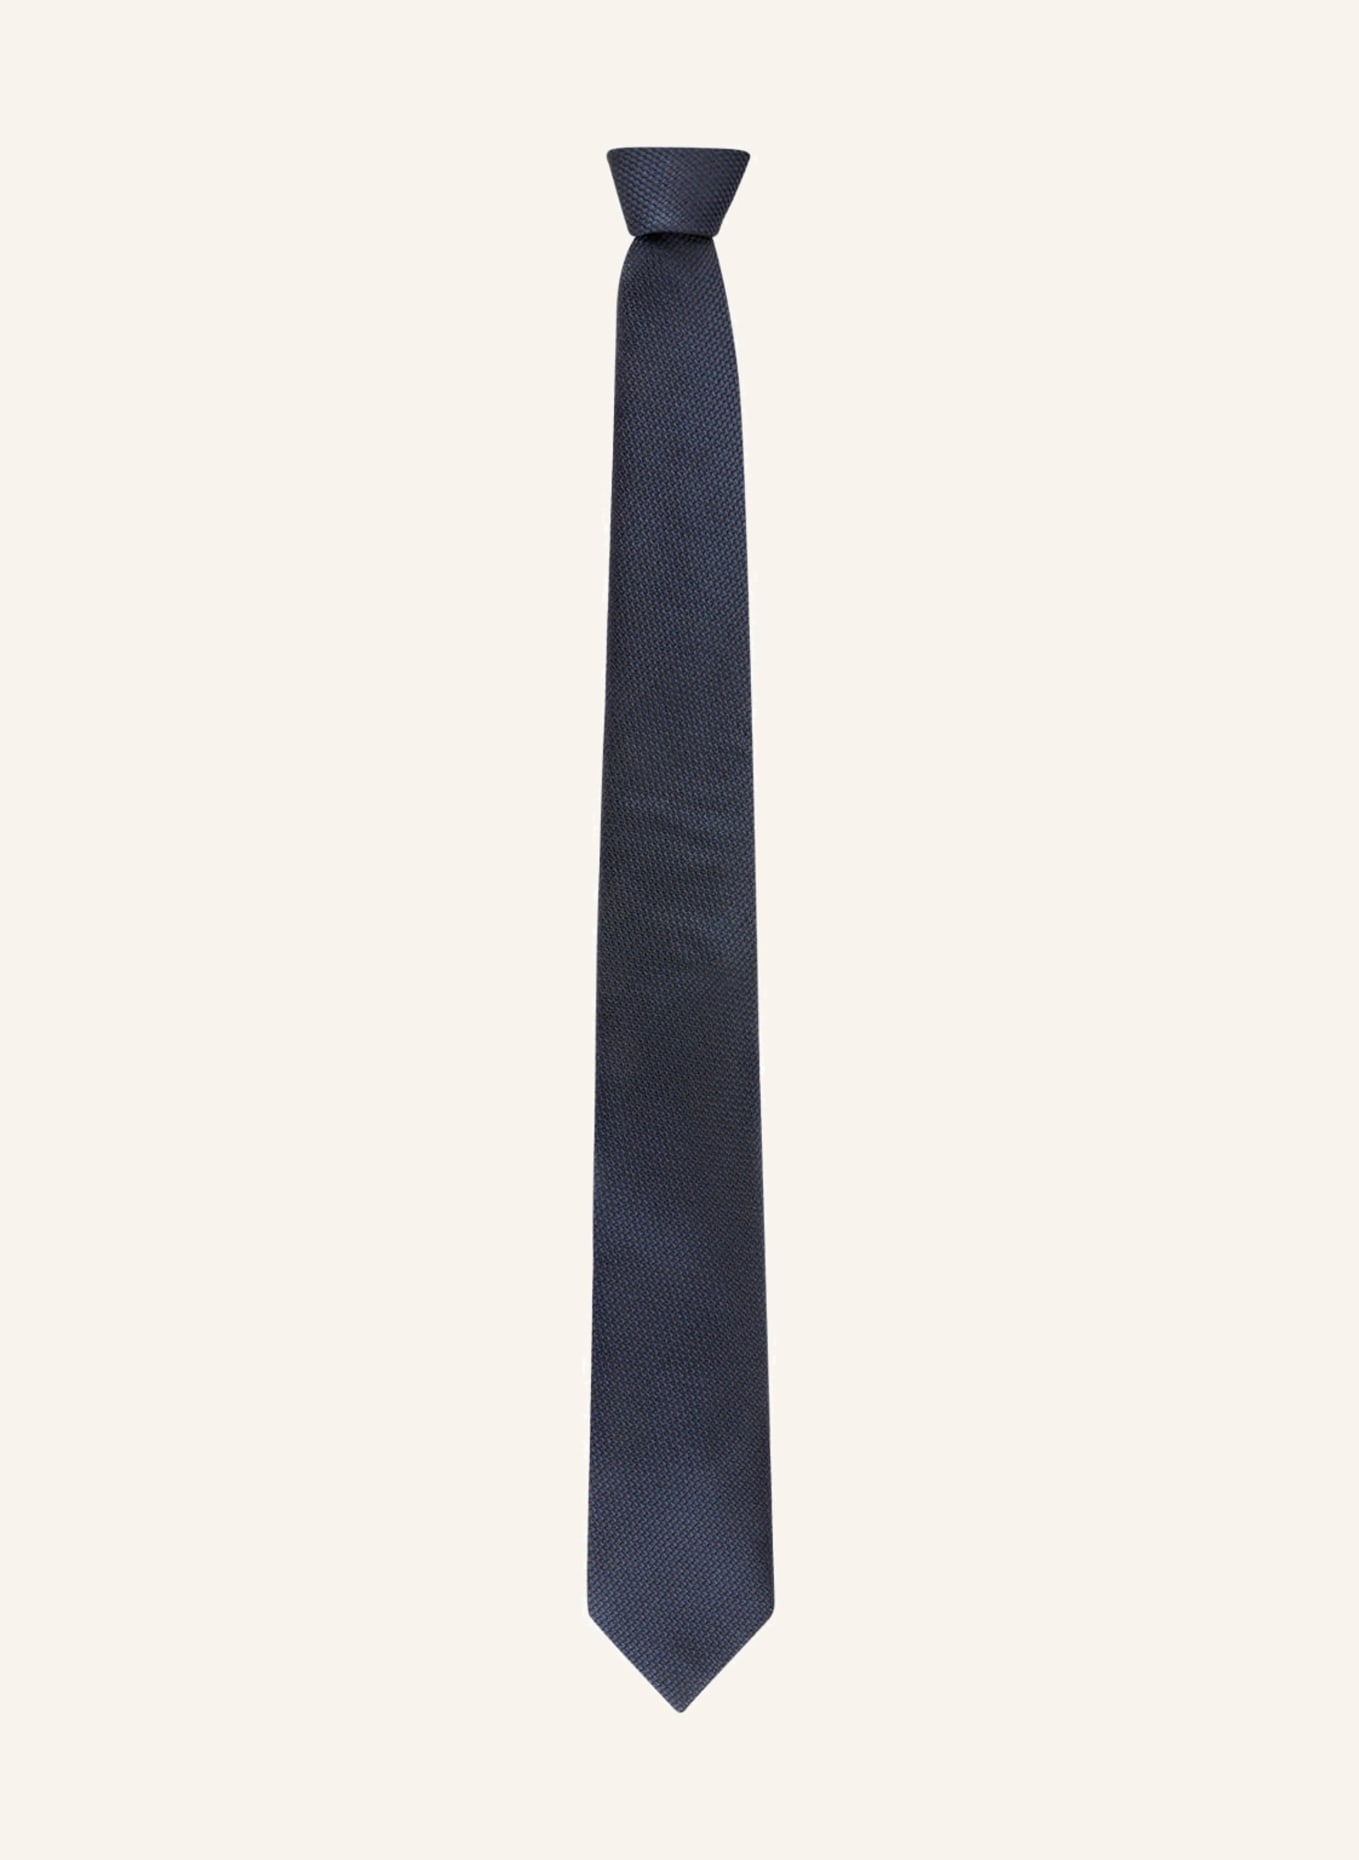 G.O.L. FINEST COLLECTION Krawatte, Farbe: NAVY (Bild 2)